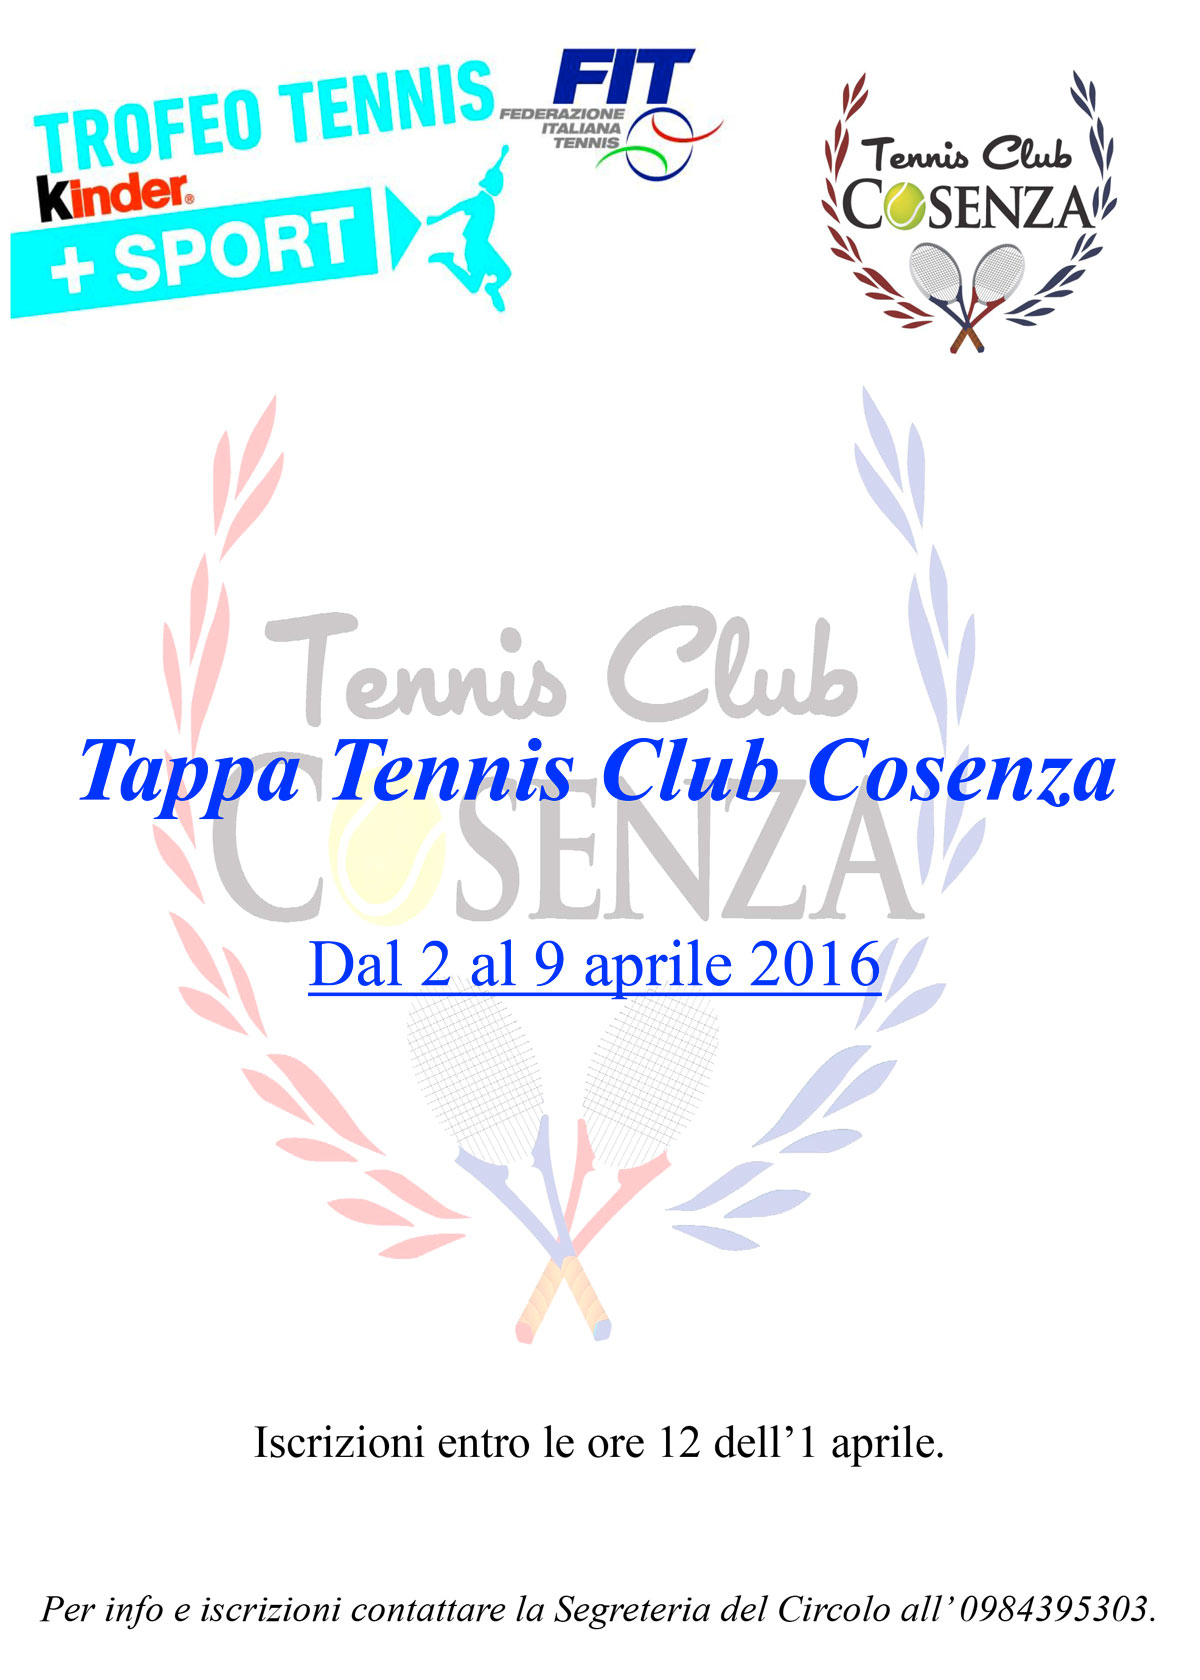 Trofeo Tennis Kinder +Sport: Tappa Tennis Club Cosenza dal 2 al 9 Aprile 2016